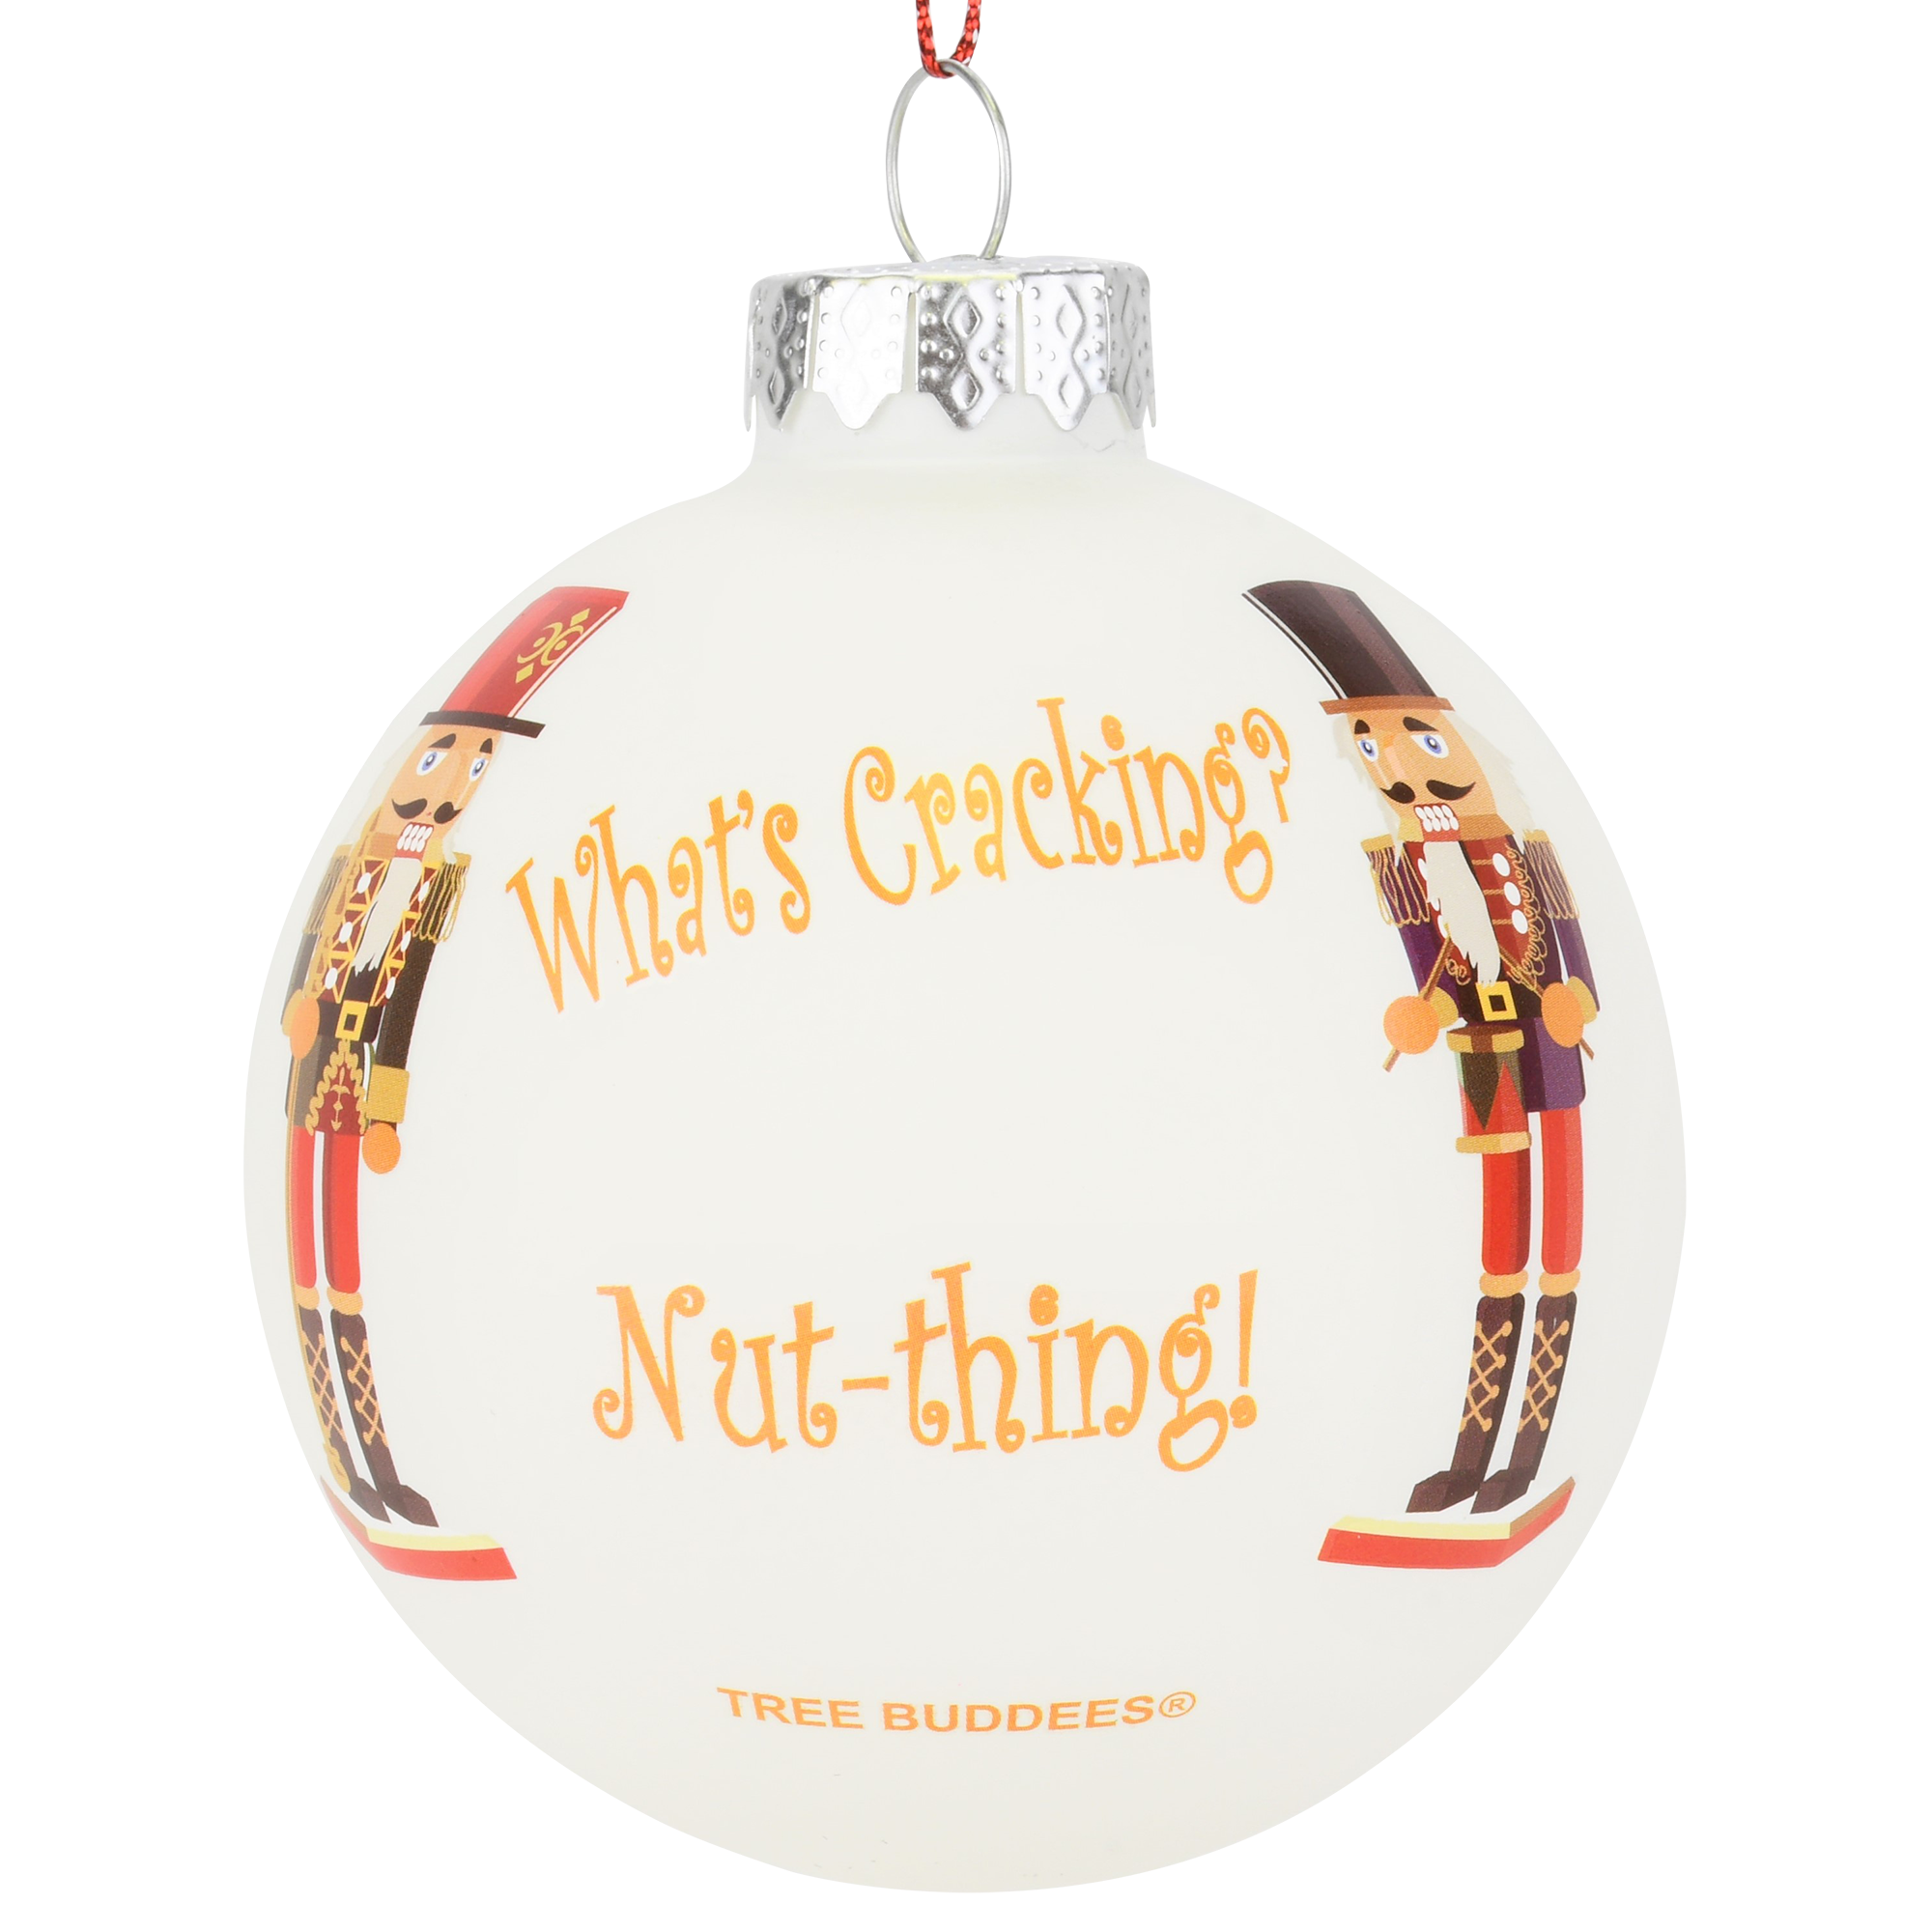 Nutcracker What’s Cracking? Nut-Thing! Fun Christmas Ornament